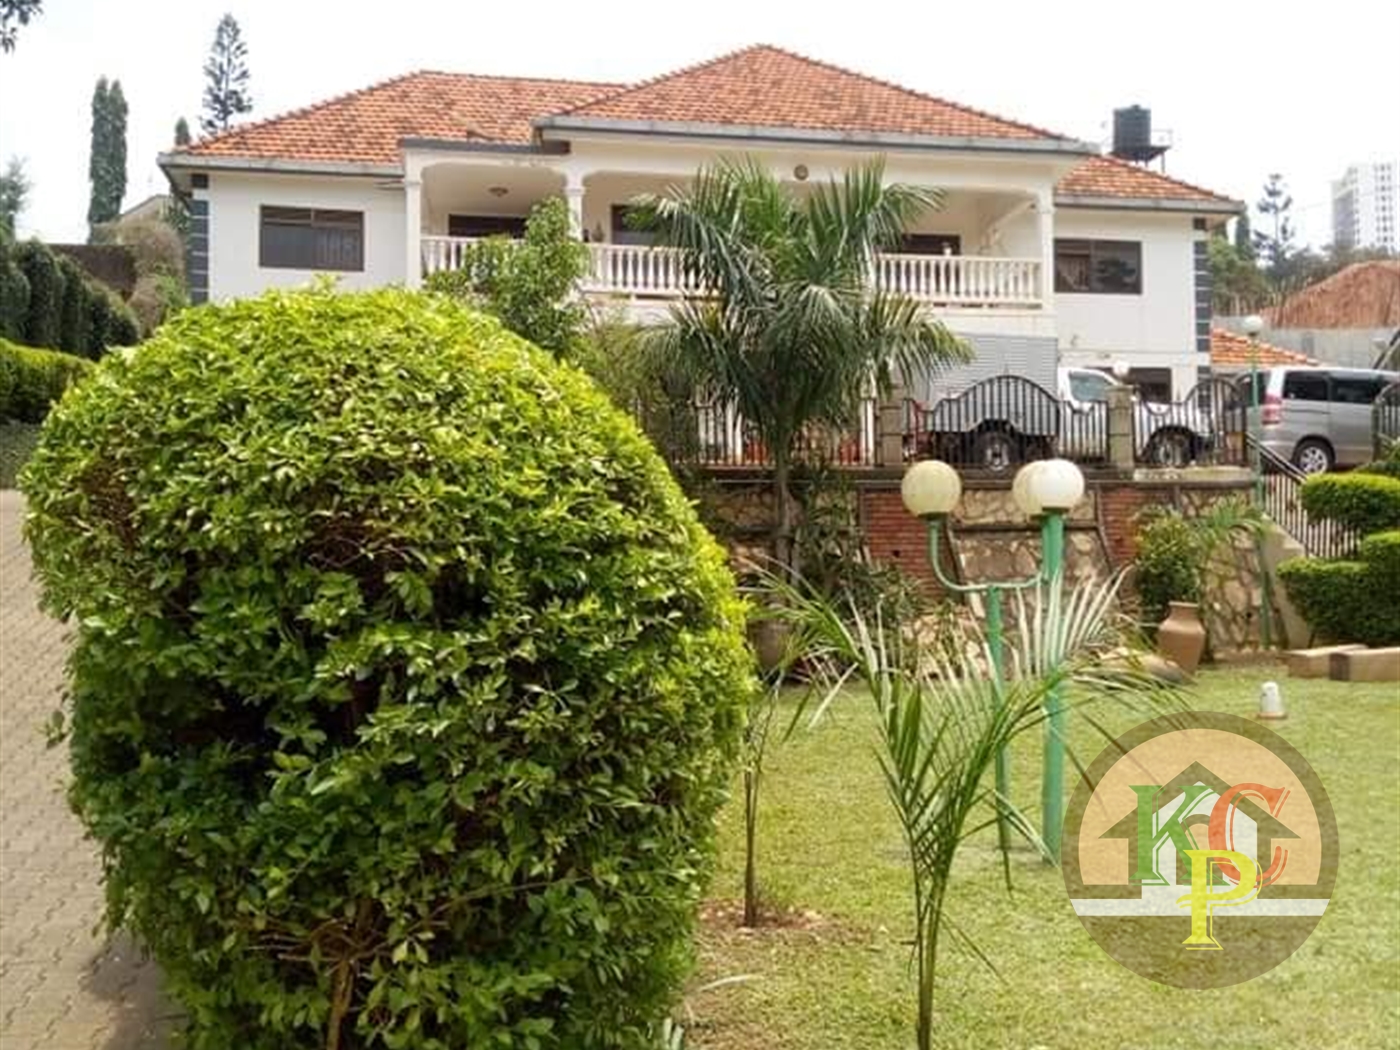 2 Bedroom House For Rent In Naguru Kampala Uganda Code 09 10 22